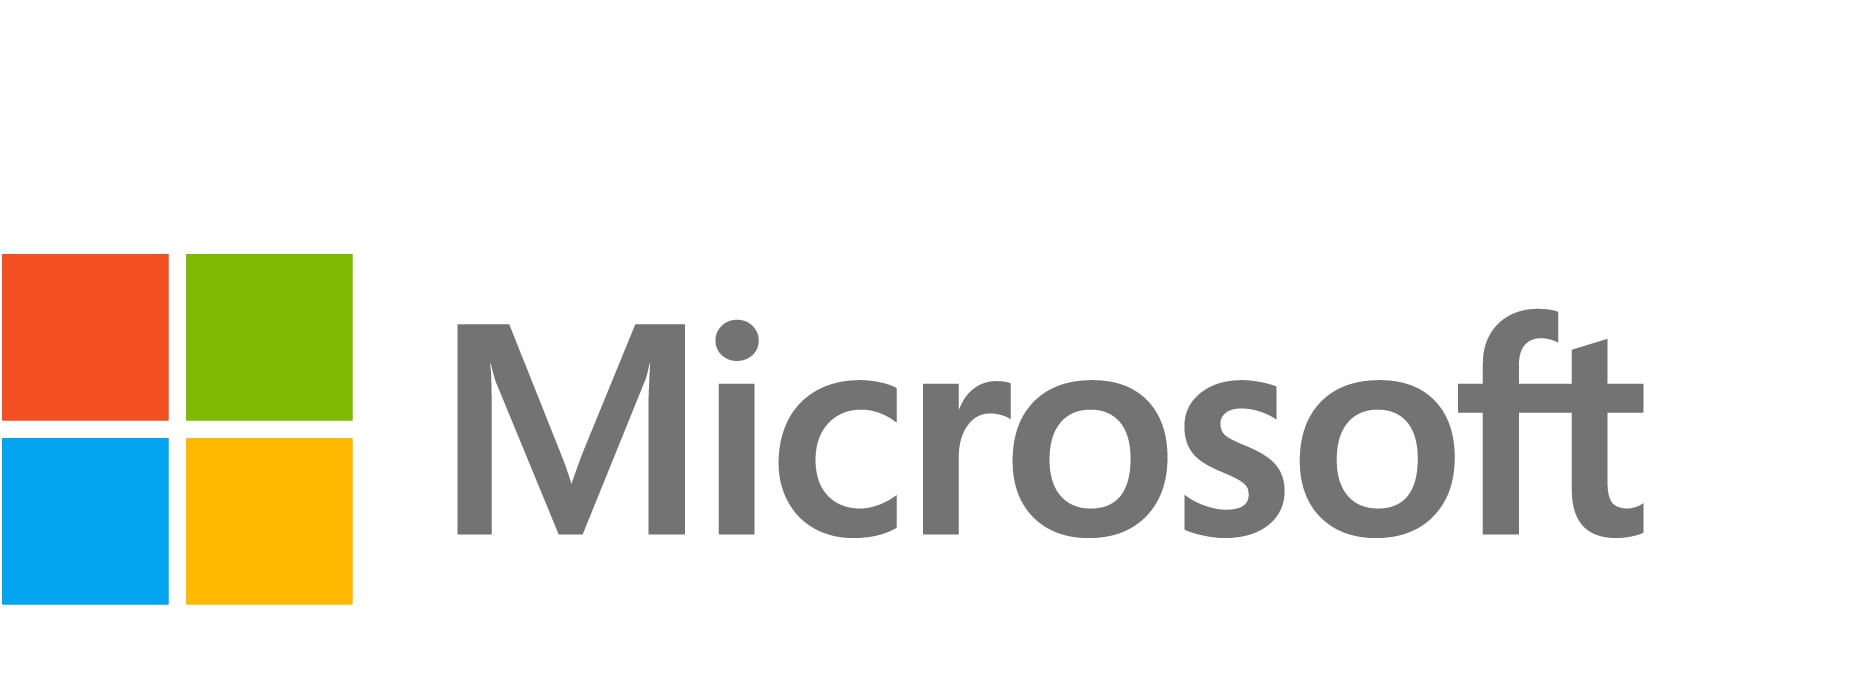 Microsoft Office 365 E3 - Enterprise Plan 3 Software Subscription (Teams Included) Subscription